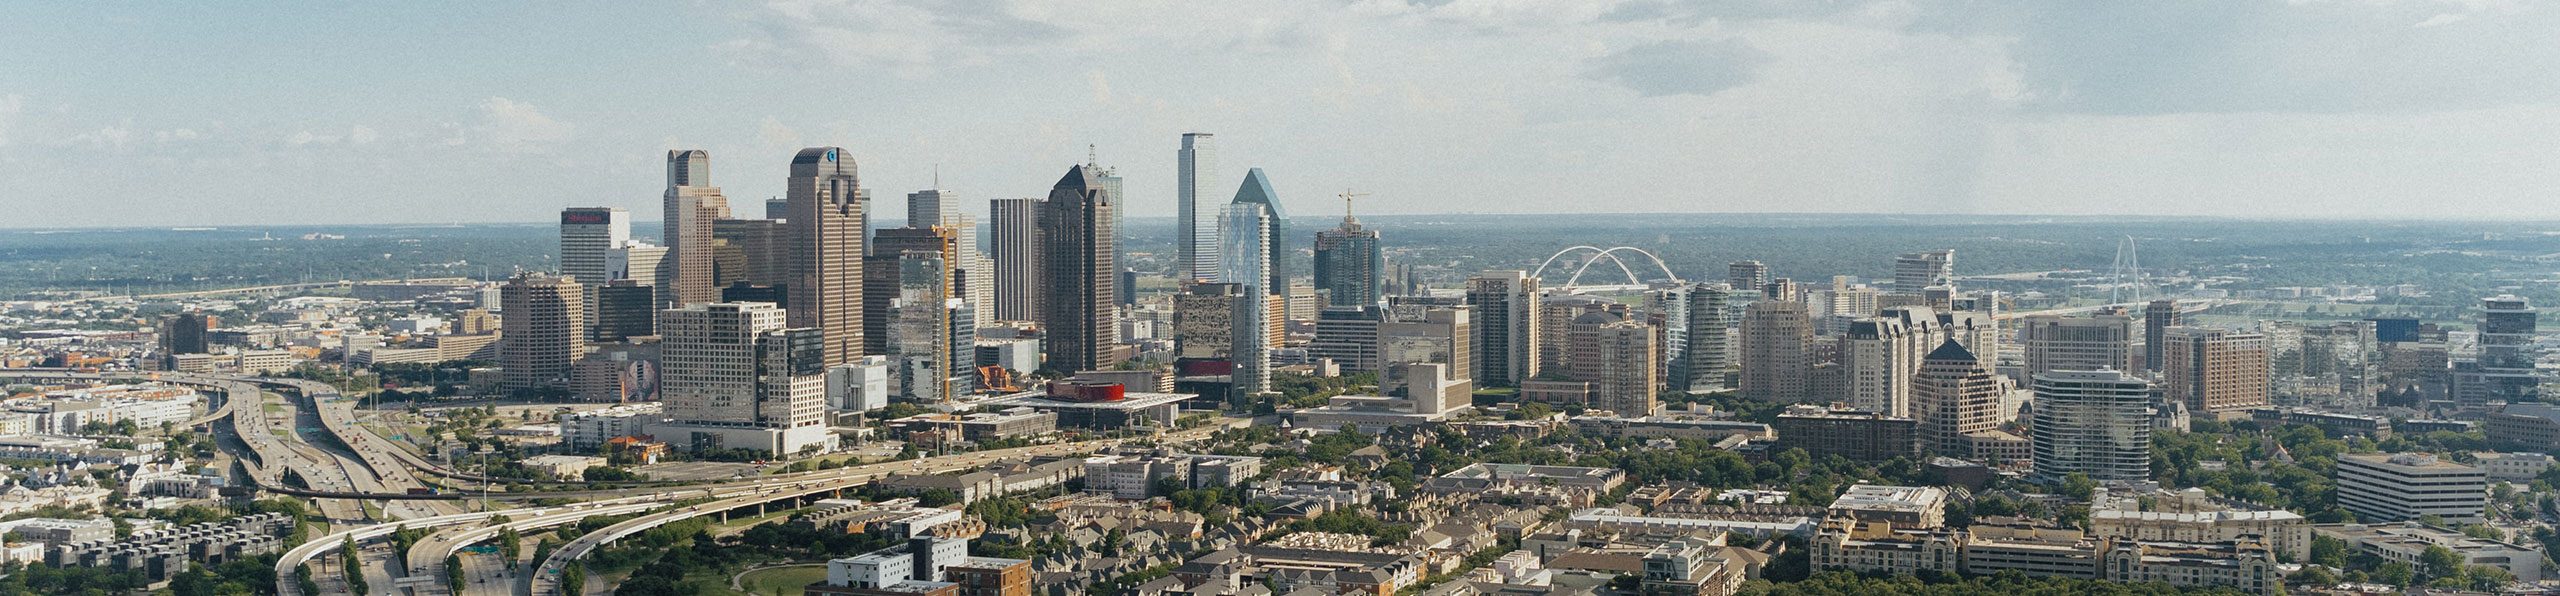 aerial view of dallas texas city skyline